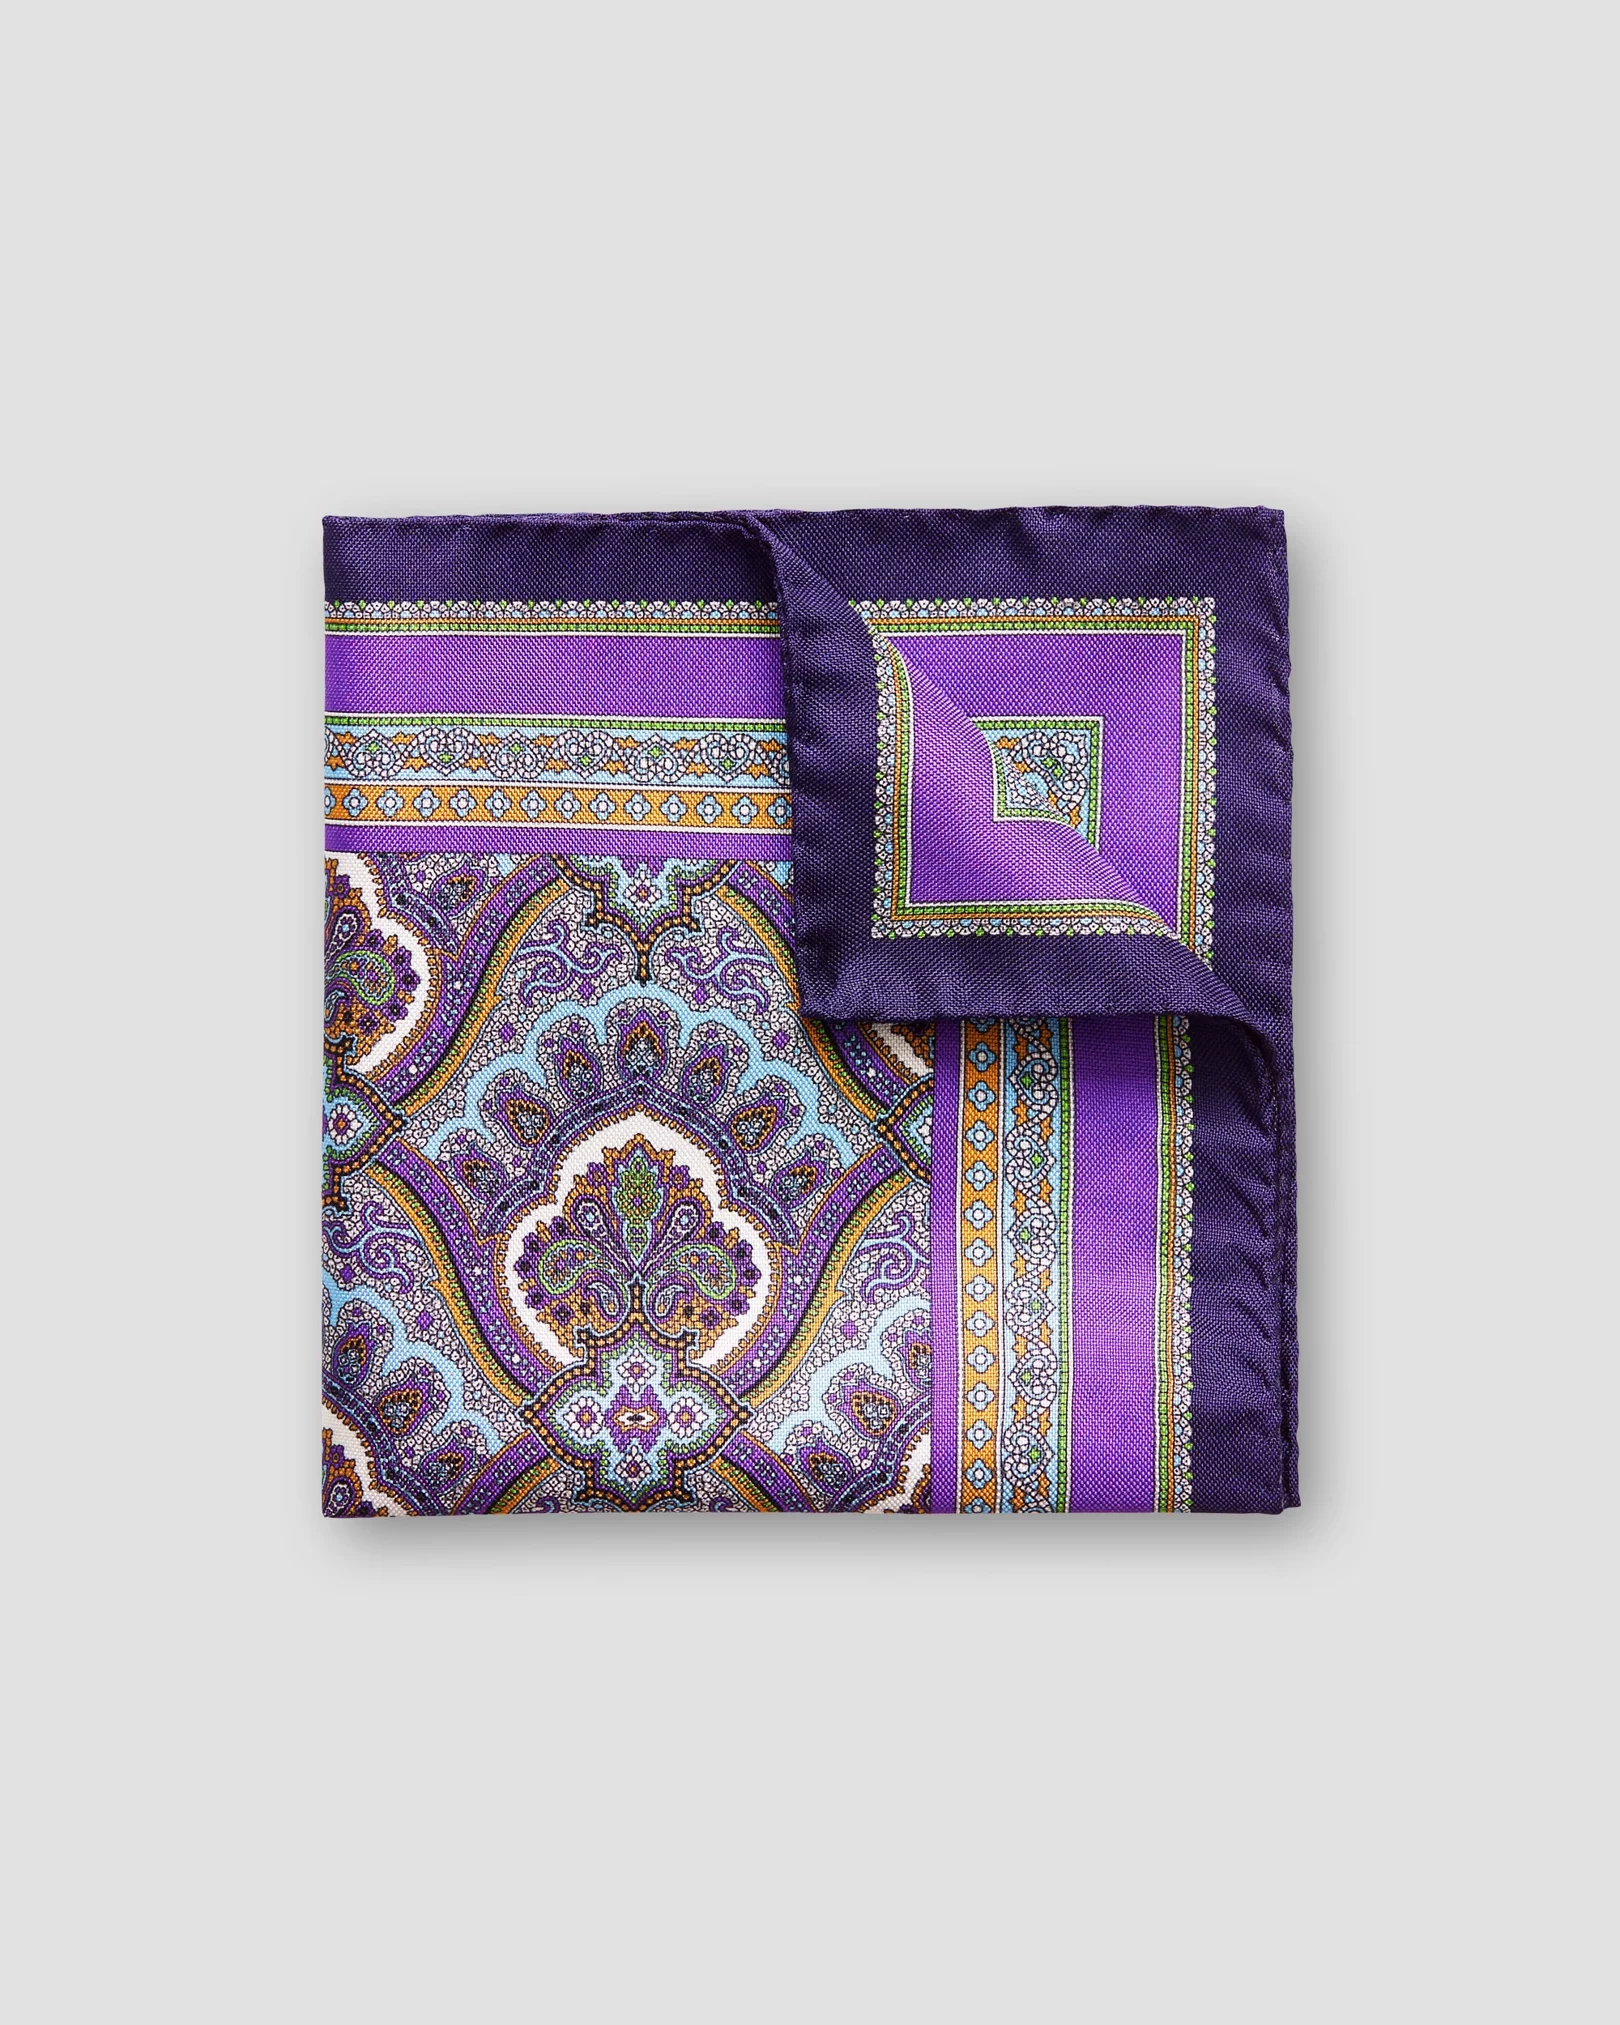 Eton - purple paisley print pocket square